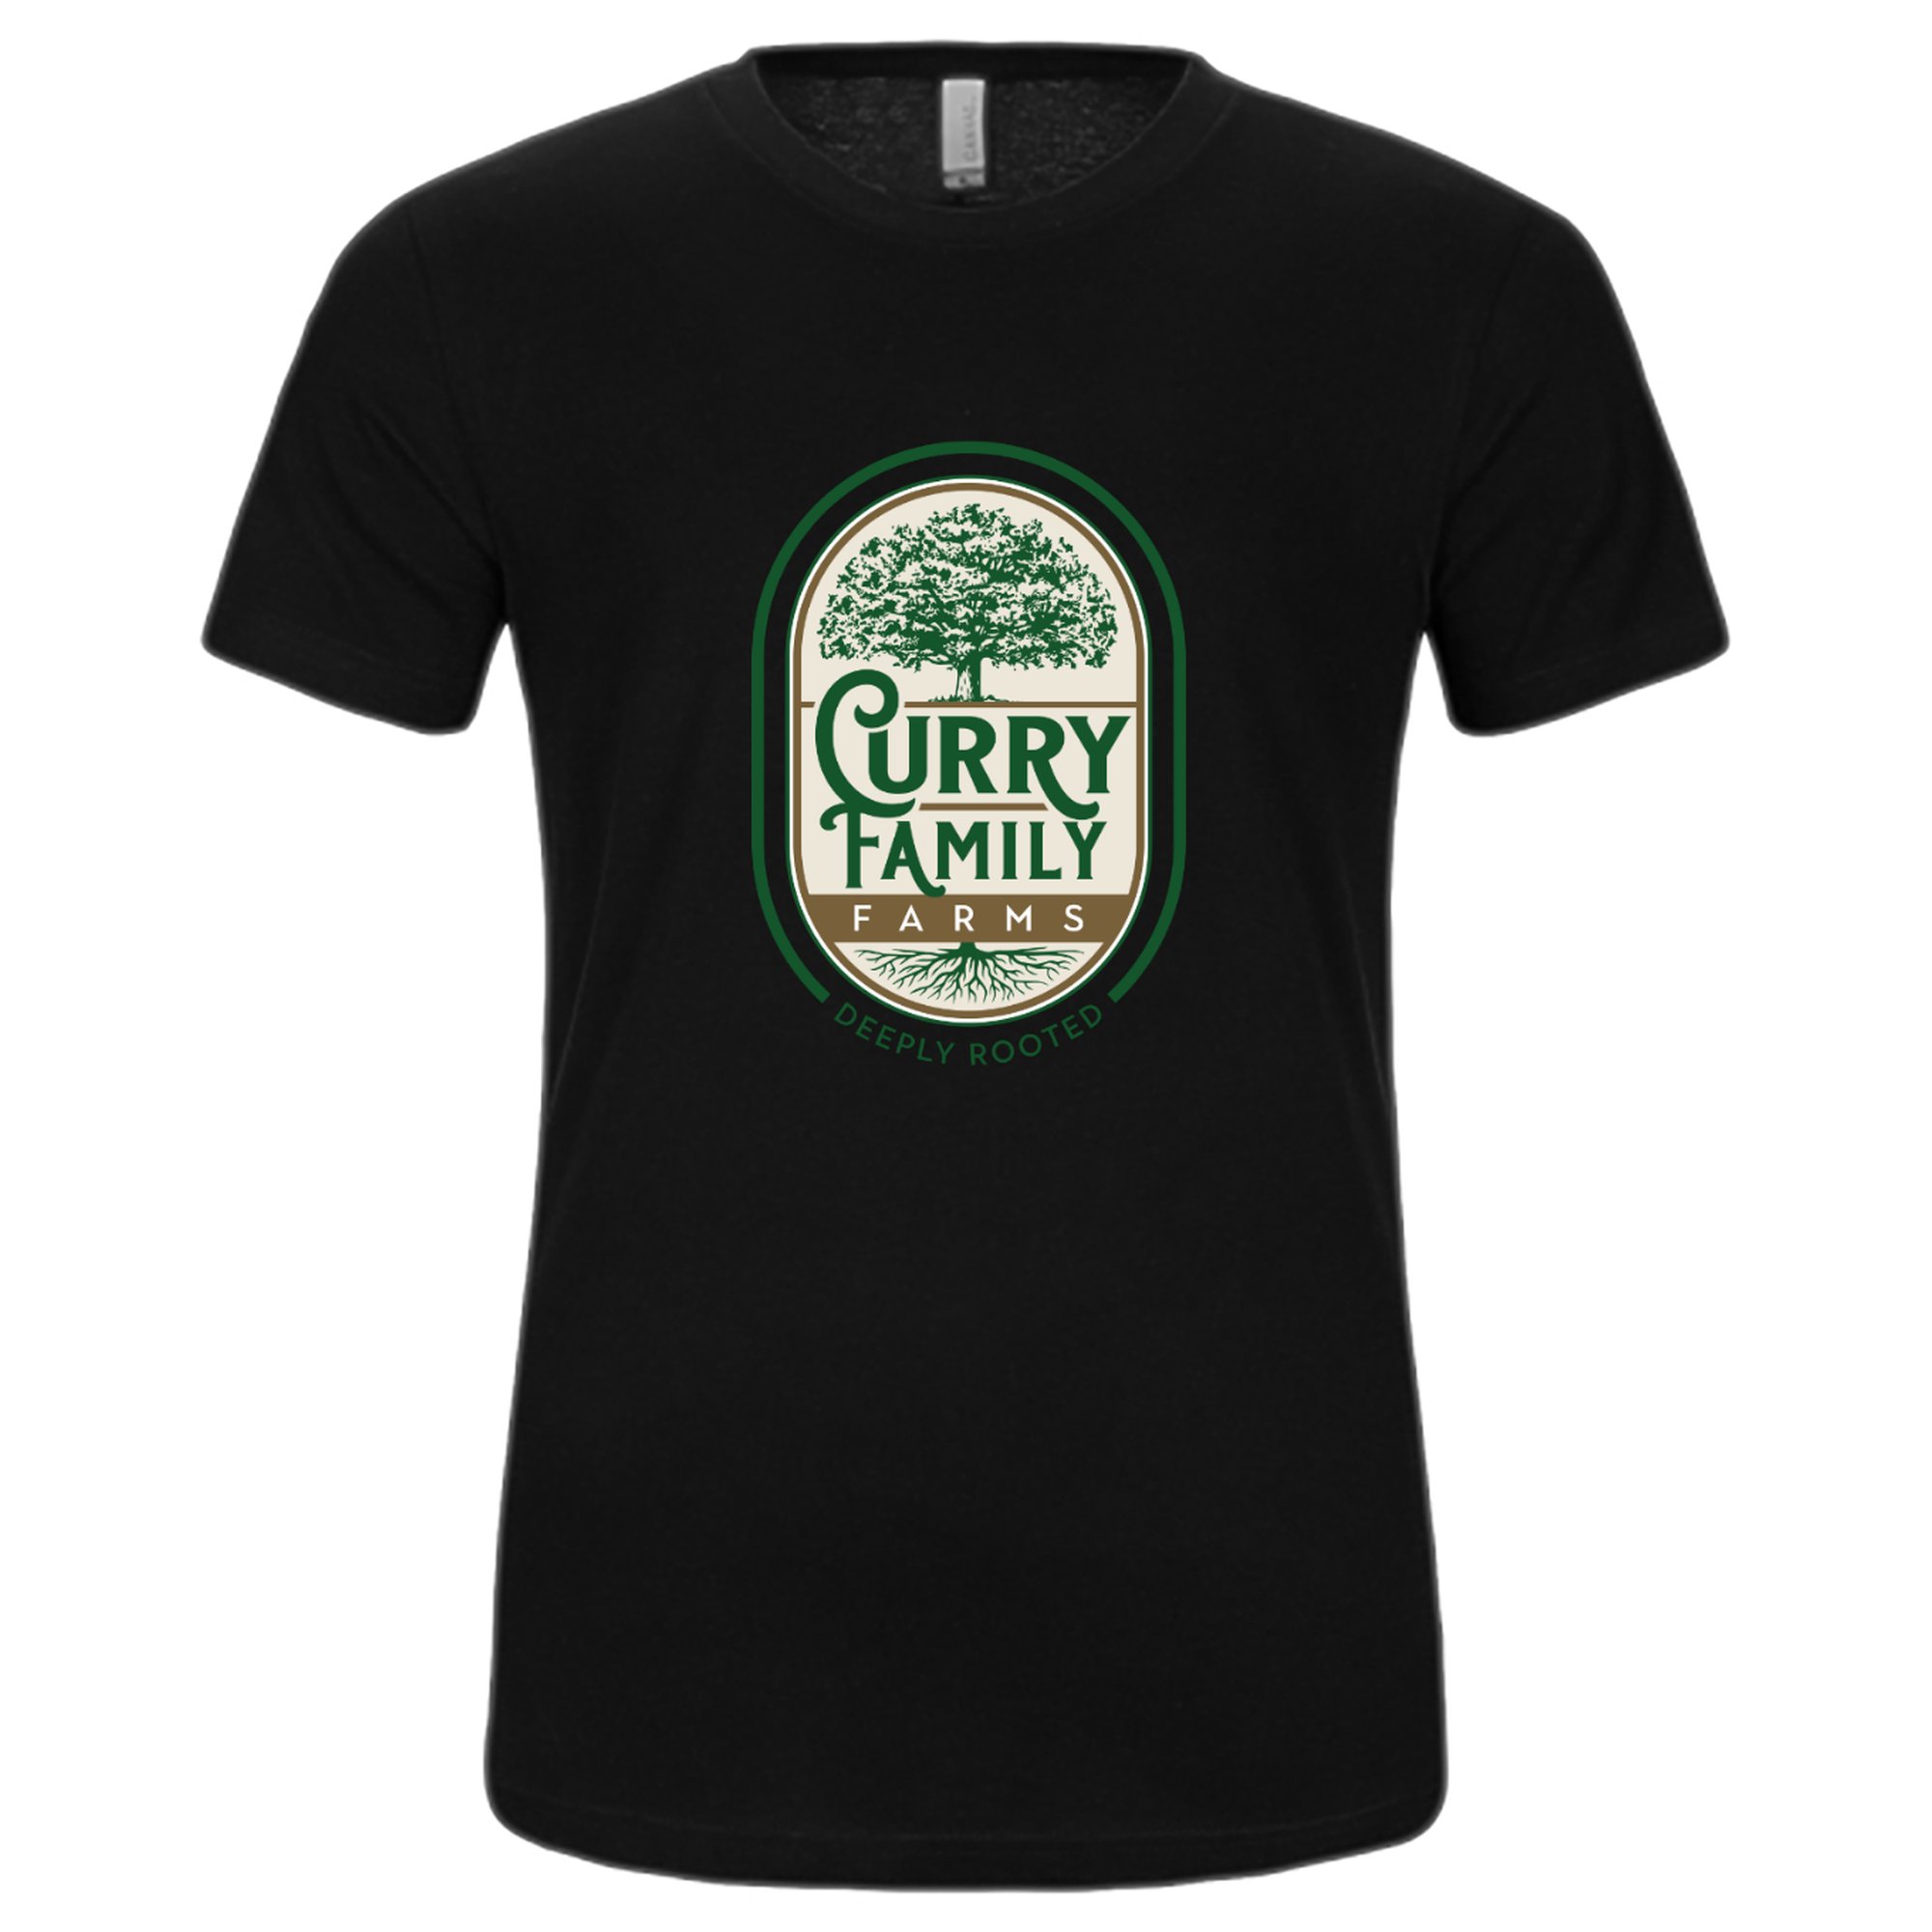 Curry Farms T-Shirt Medium